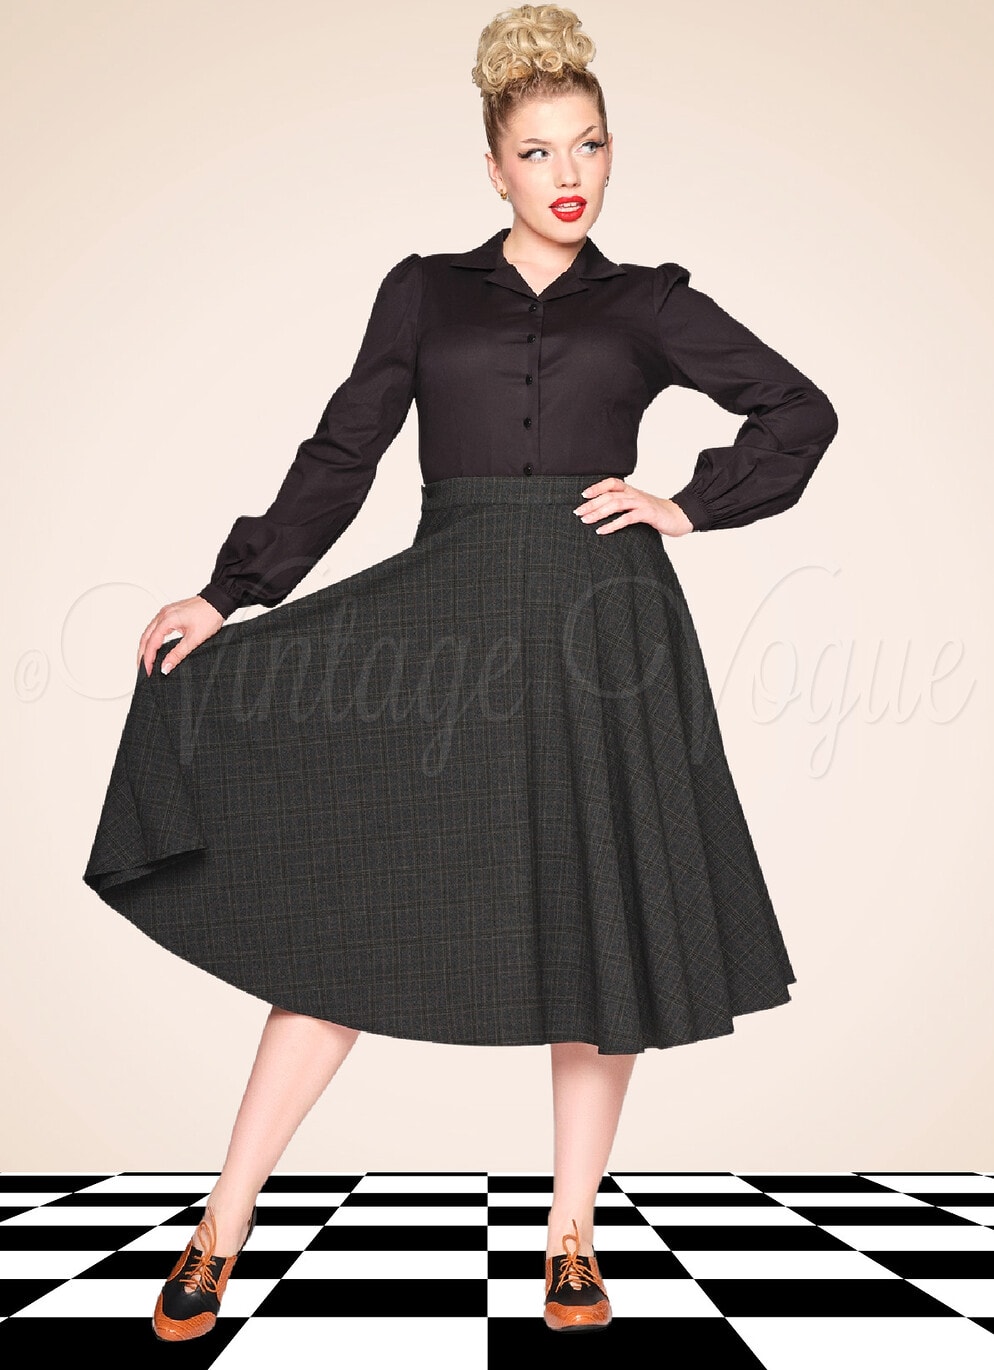 Collectif Vintage Academia Dandy Tartan Teller Rock Professor Check Skirt in Grau Braun Büro Office Business